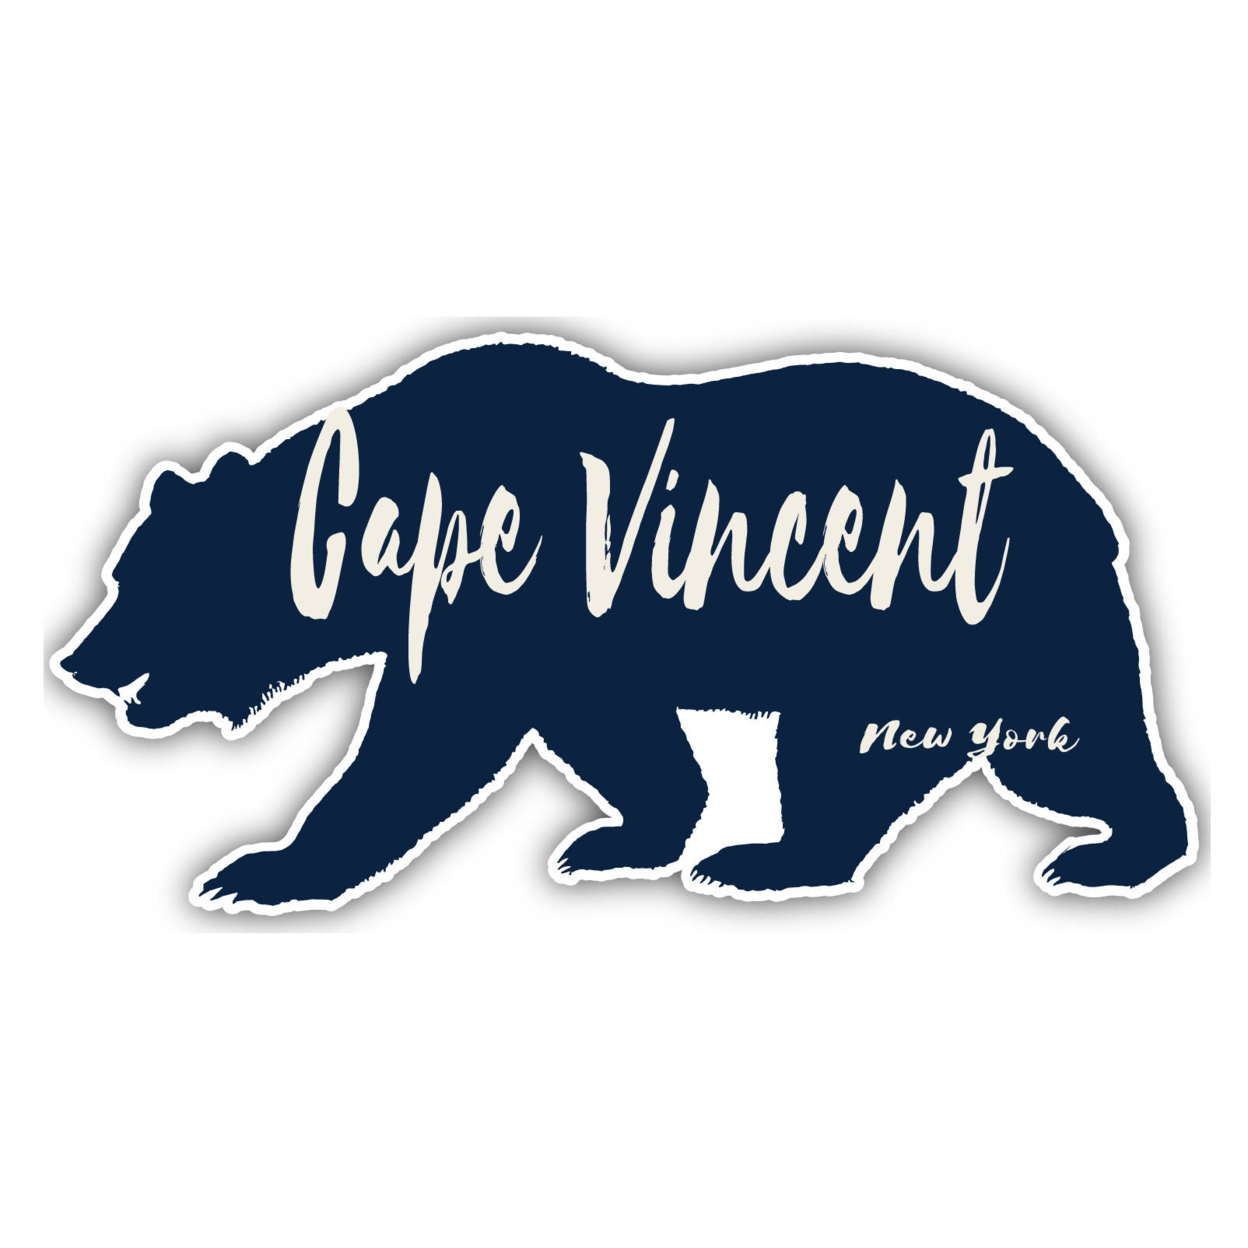 Cape Vincent New York Souvenir Decorative Stickers (Choose Theme And Size) - 4-Pack, 4-Inch, Bear